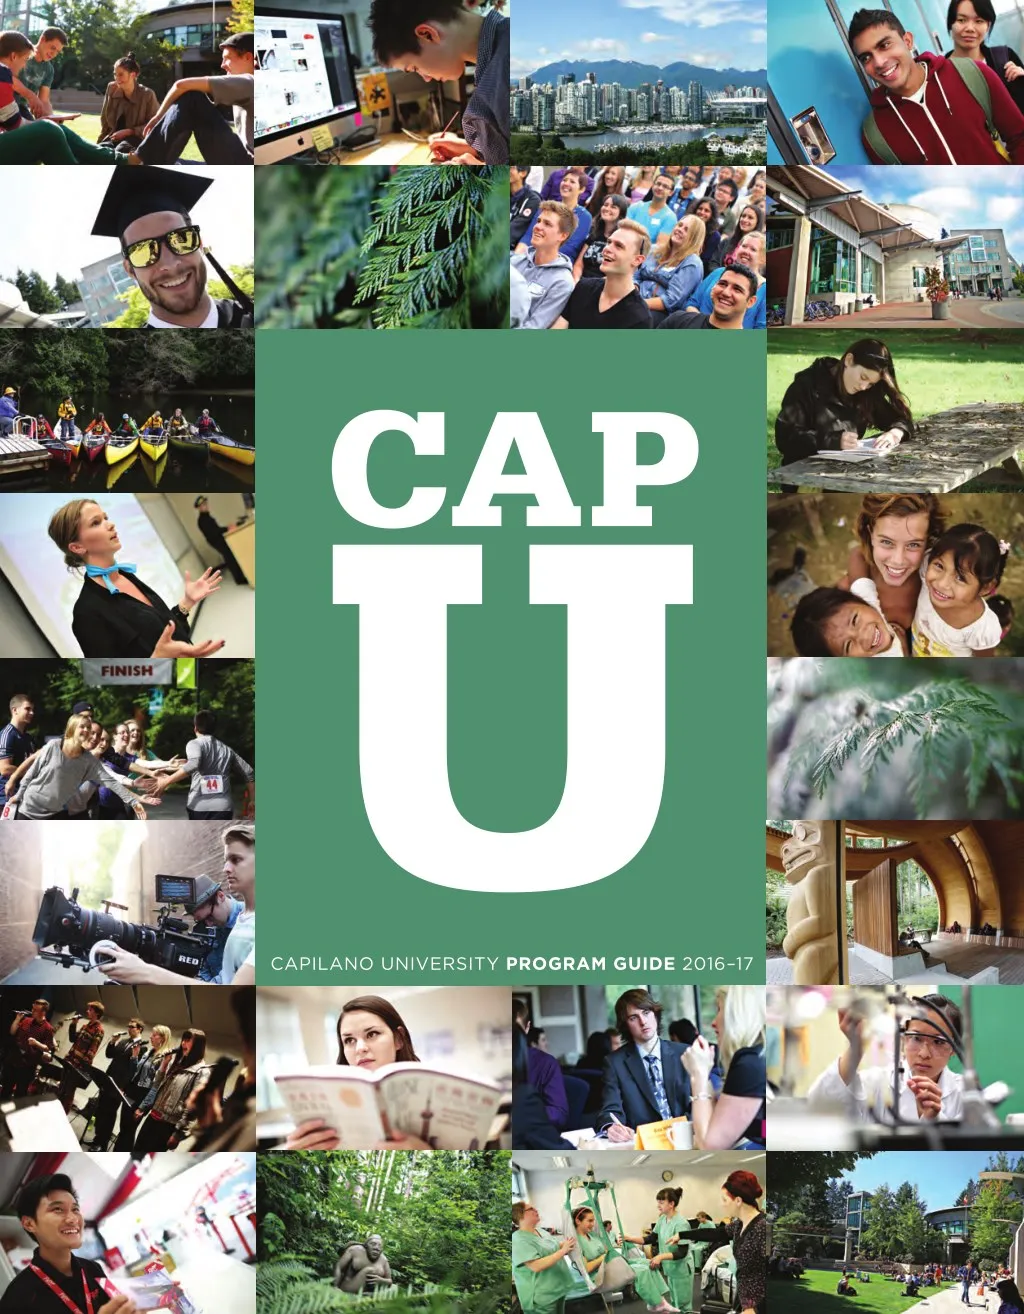 capilano university program guide 2016 17